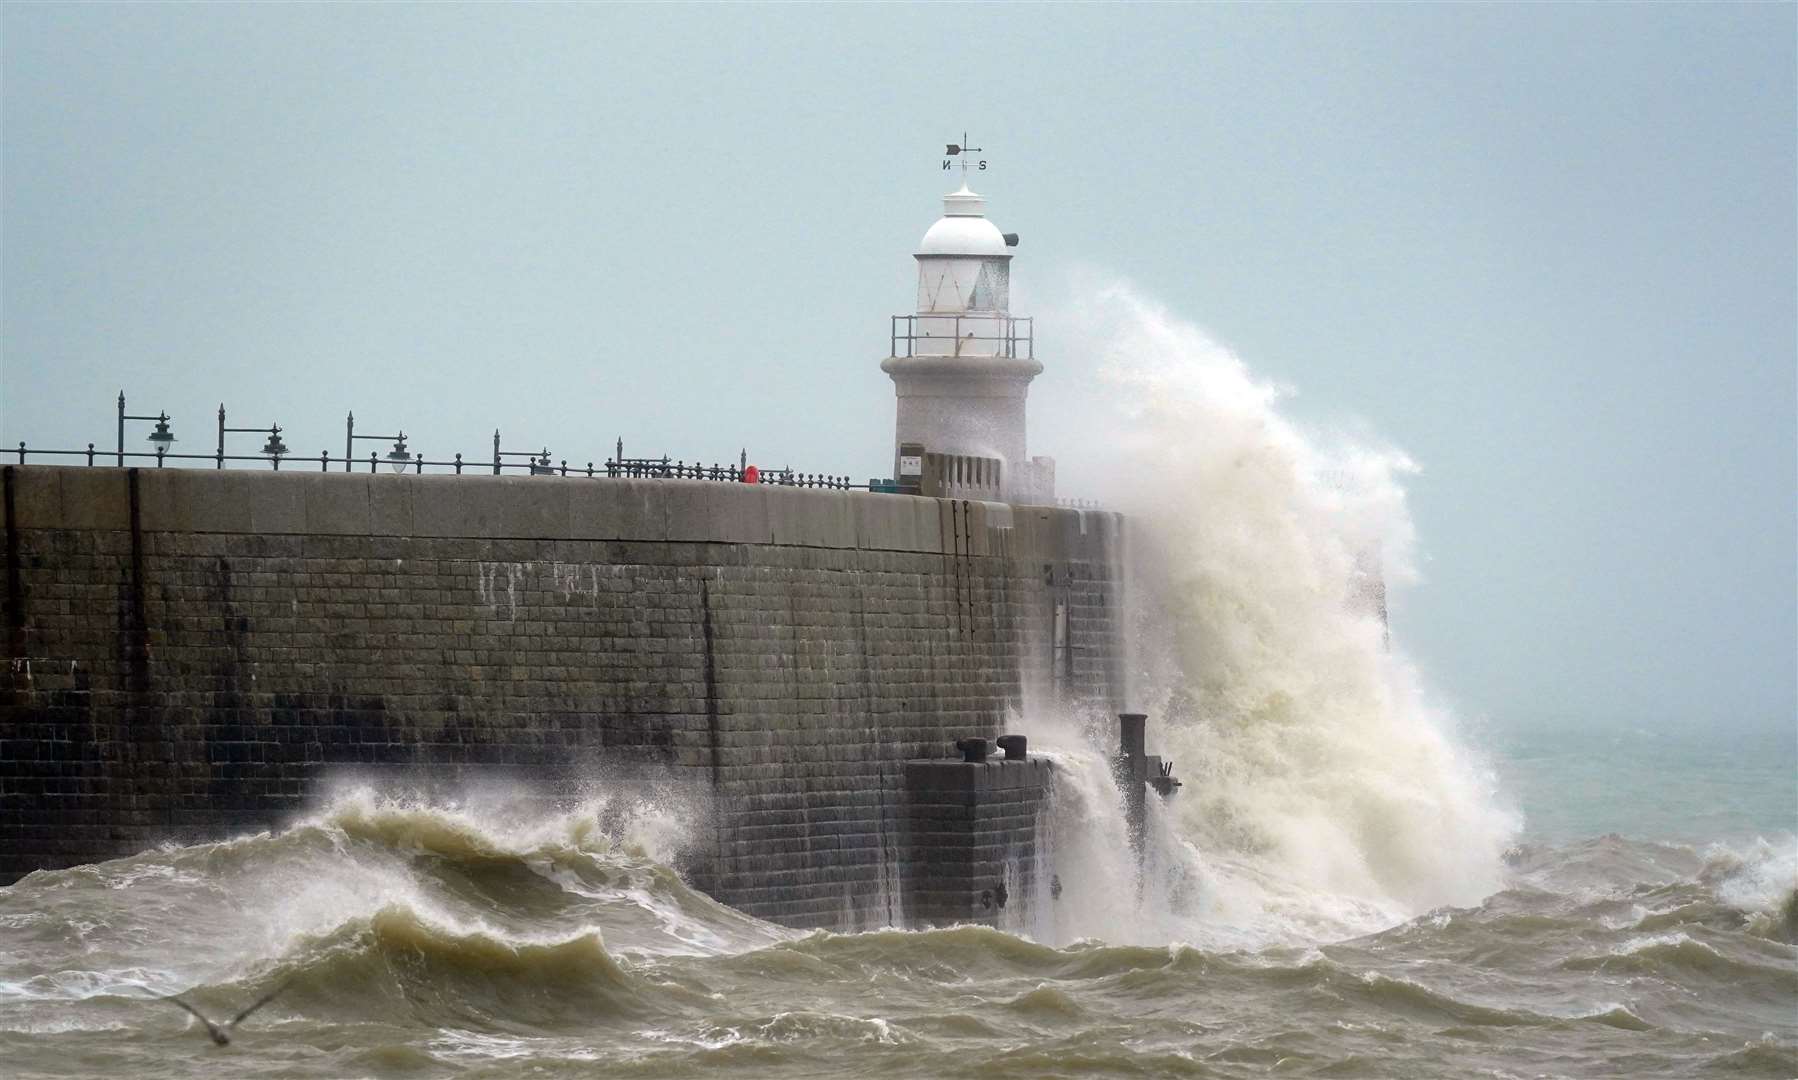 Waves crash over the harbour arm during bad weather in Folkestone, Kent (Gareth Fuller/PA)